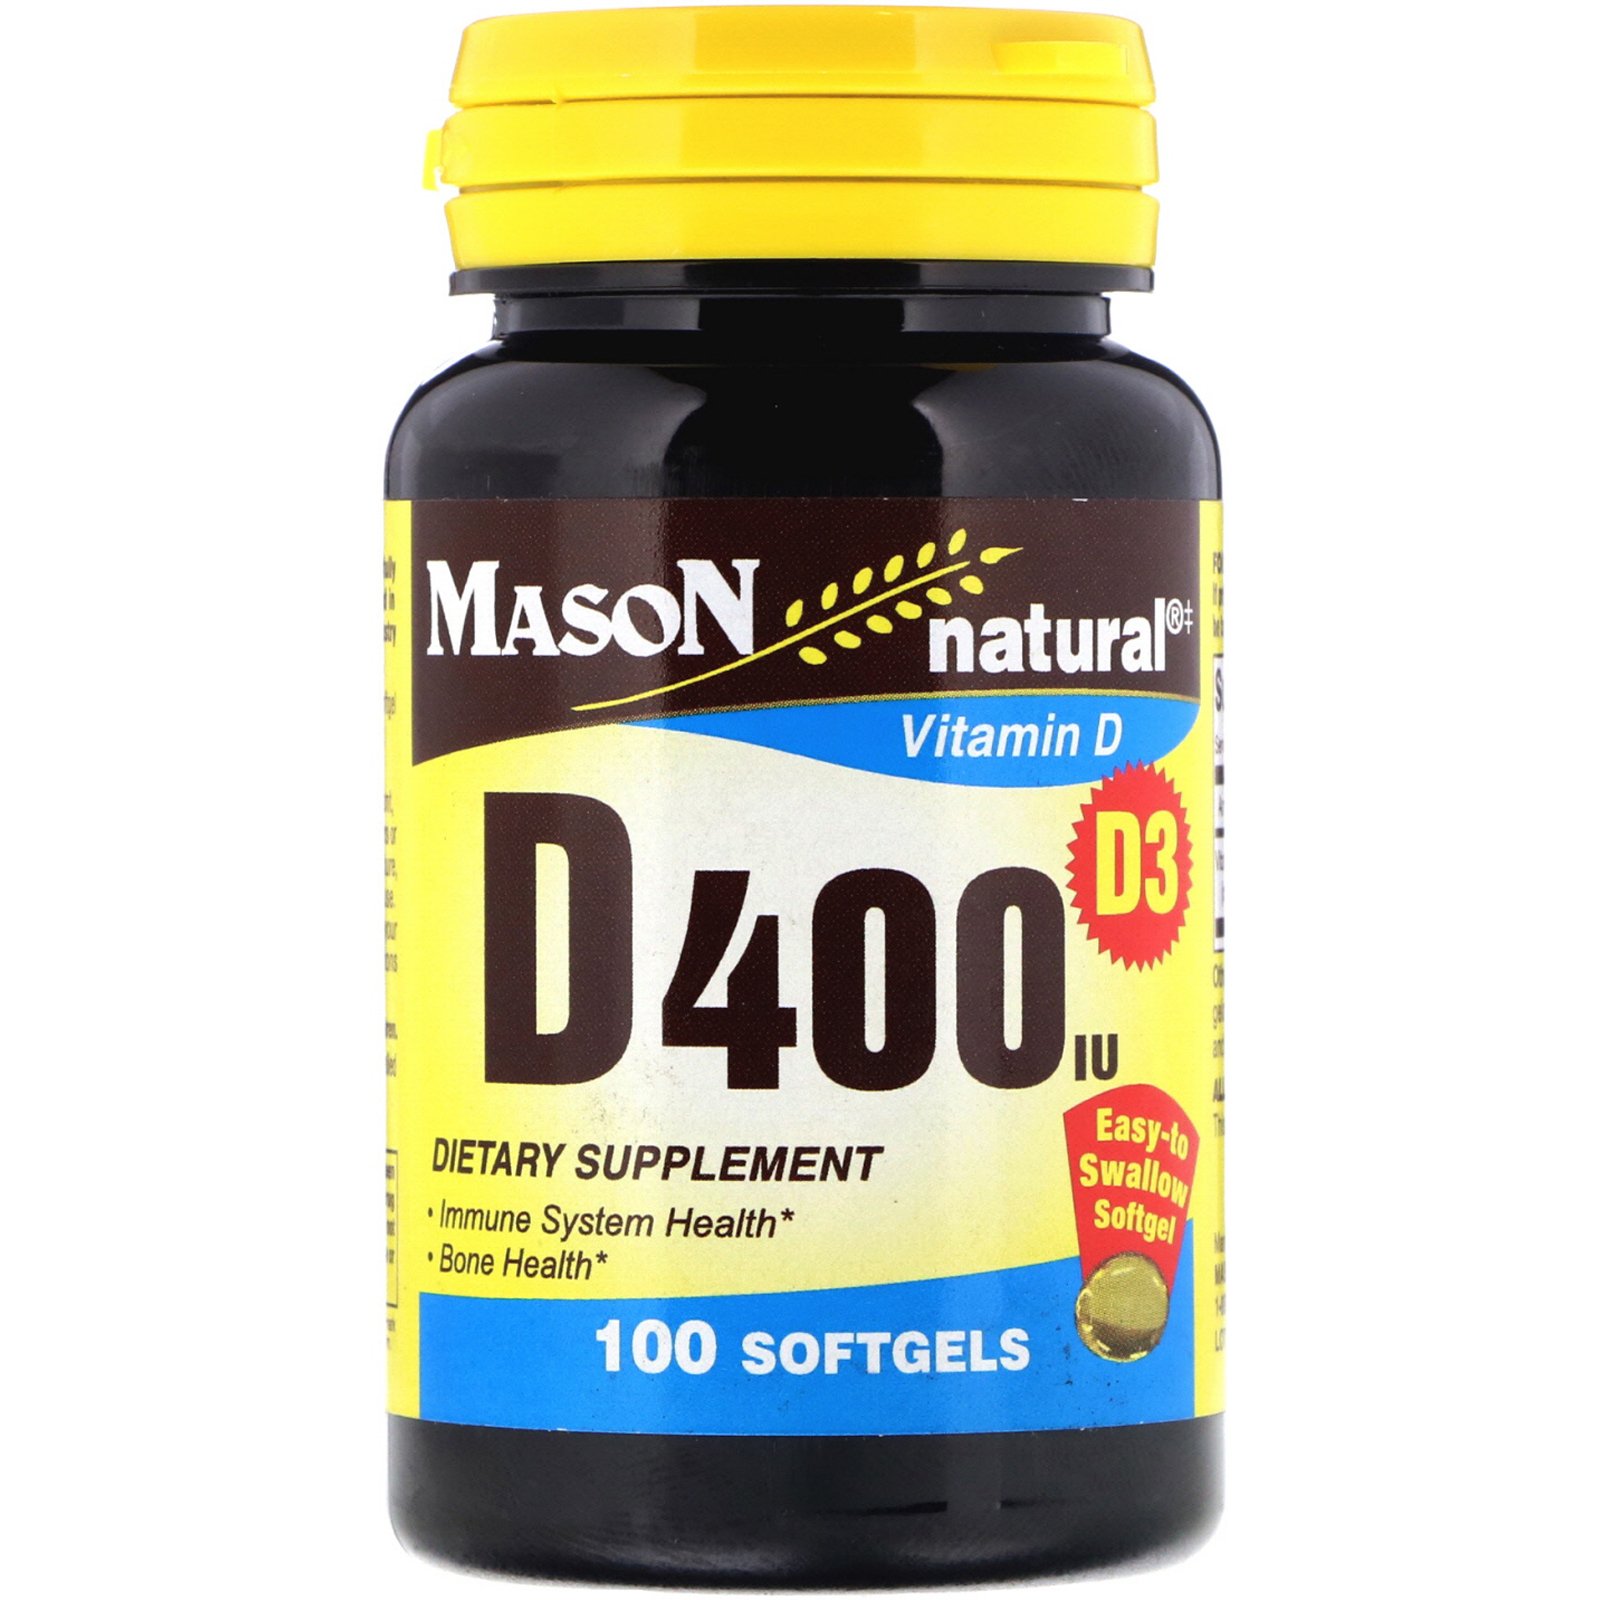 Mason Natural Vitamin D3 400 IU 100 Softgels 311845118318 | eBay